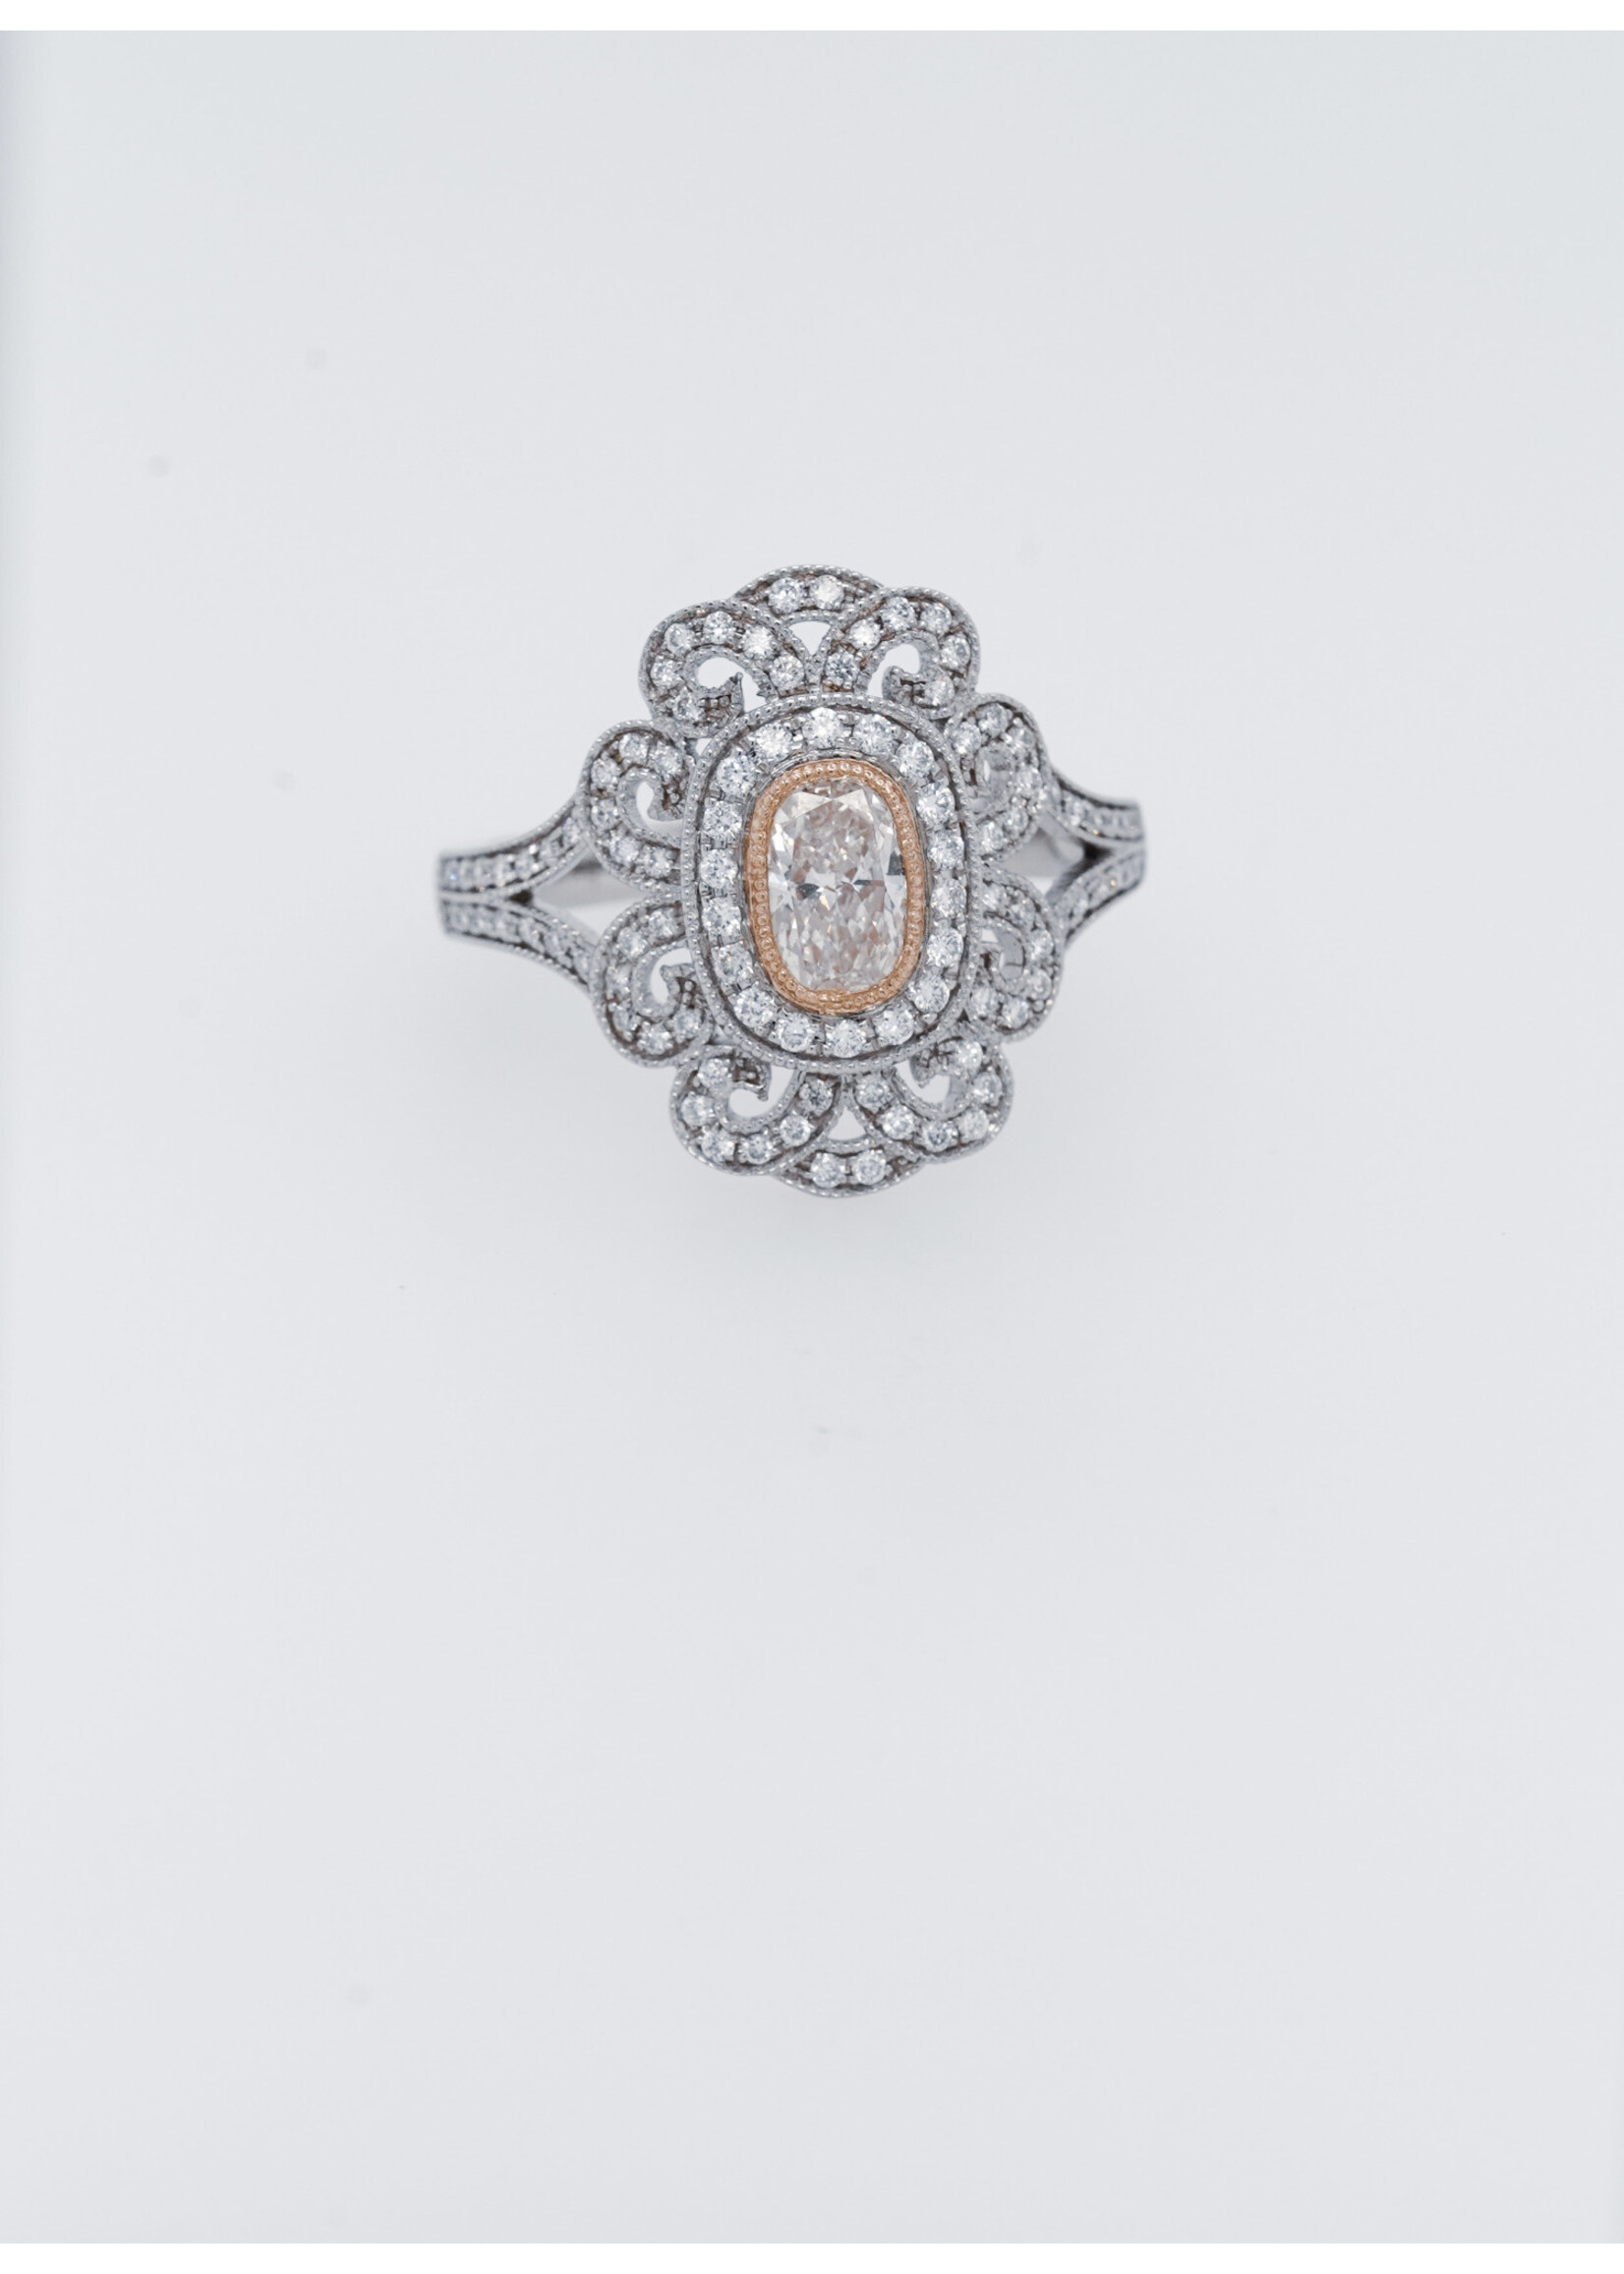 14KW 5.1g 0.91ctw (0.54ctr) K/SI1 Cushion Diamond Halo Fashion Ring (size 6.5)